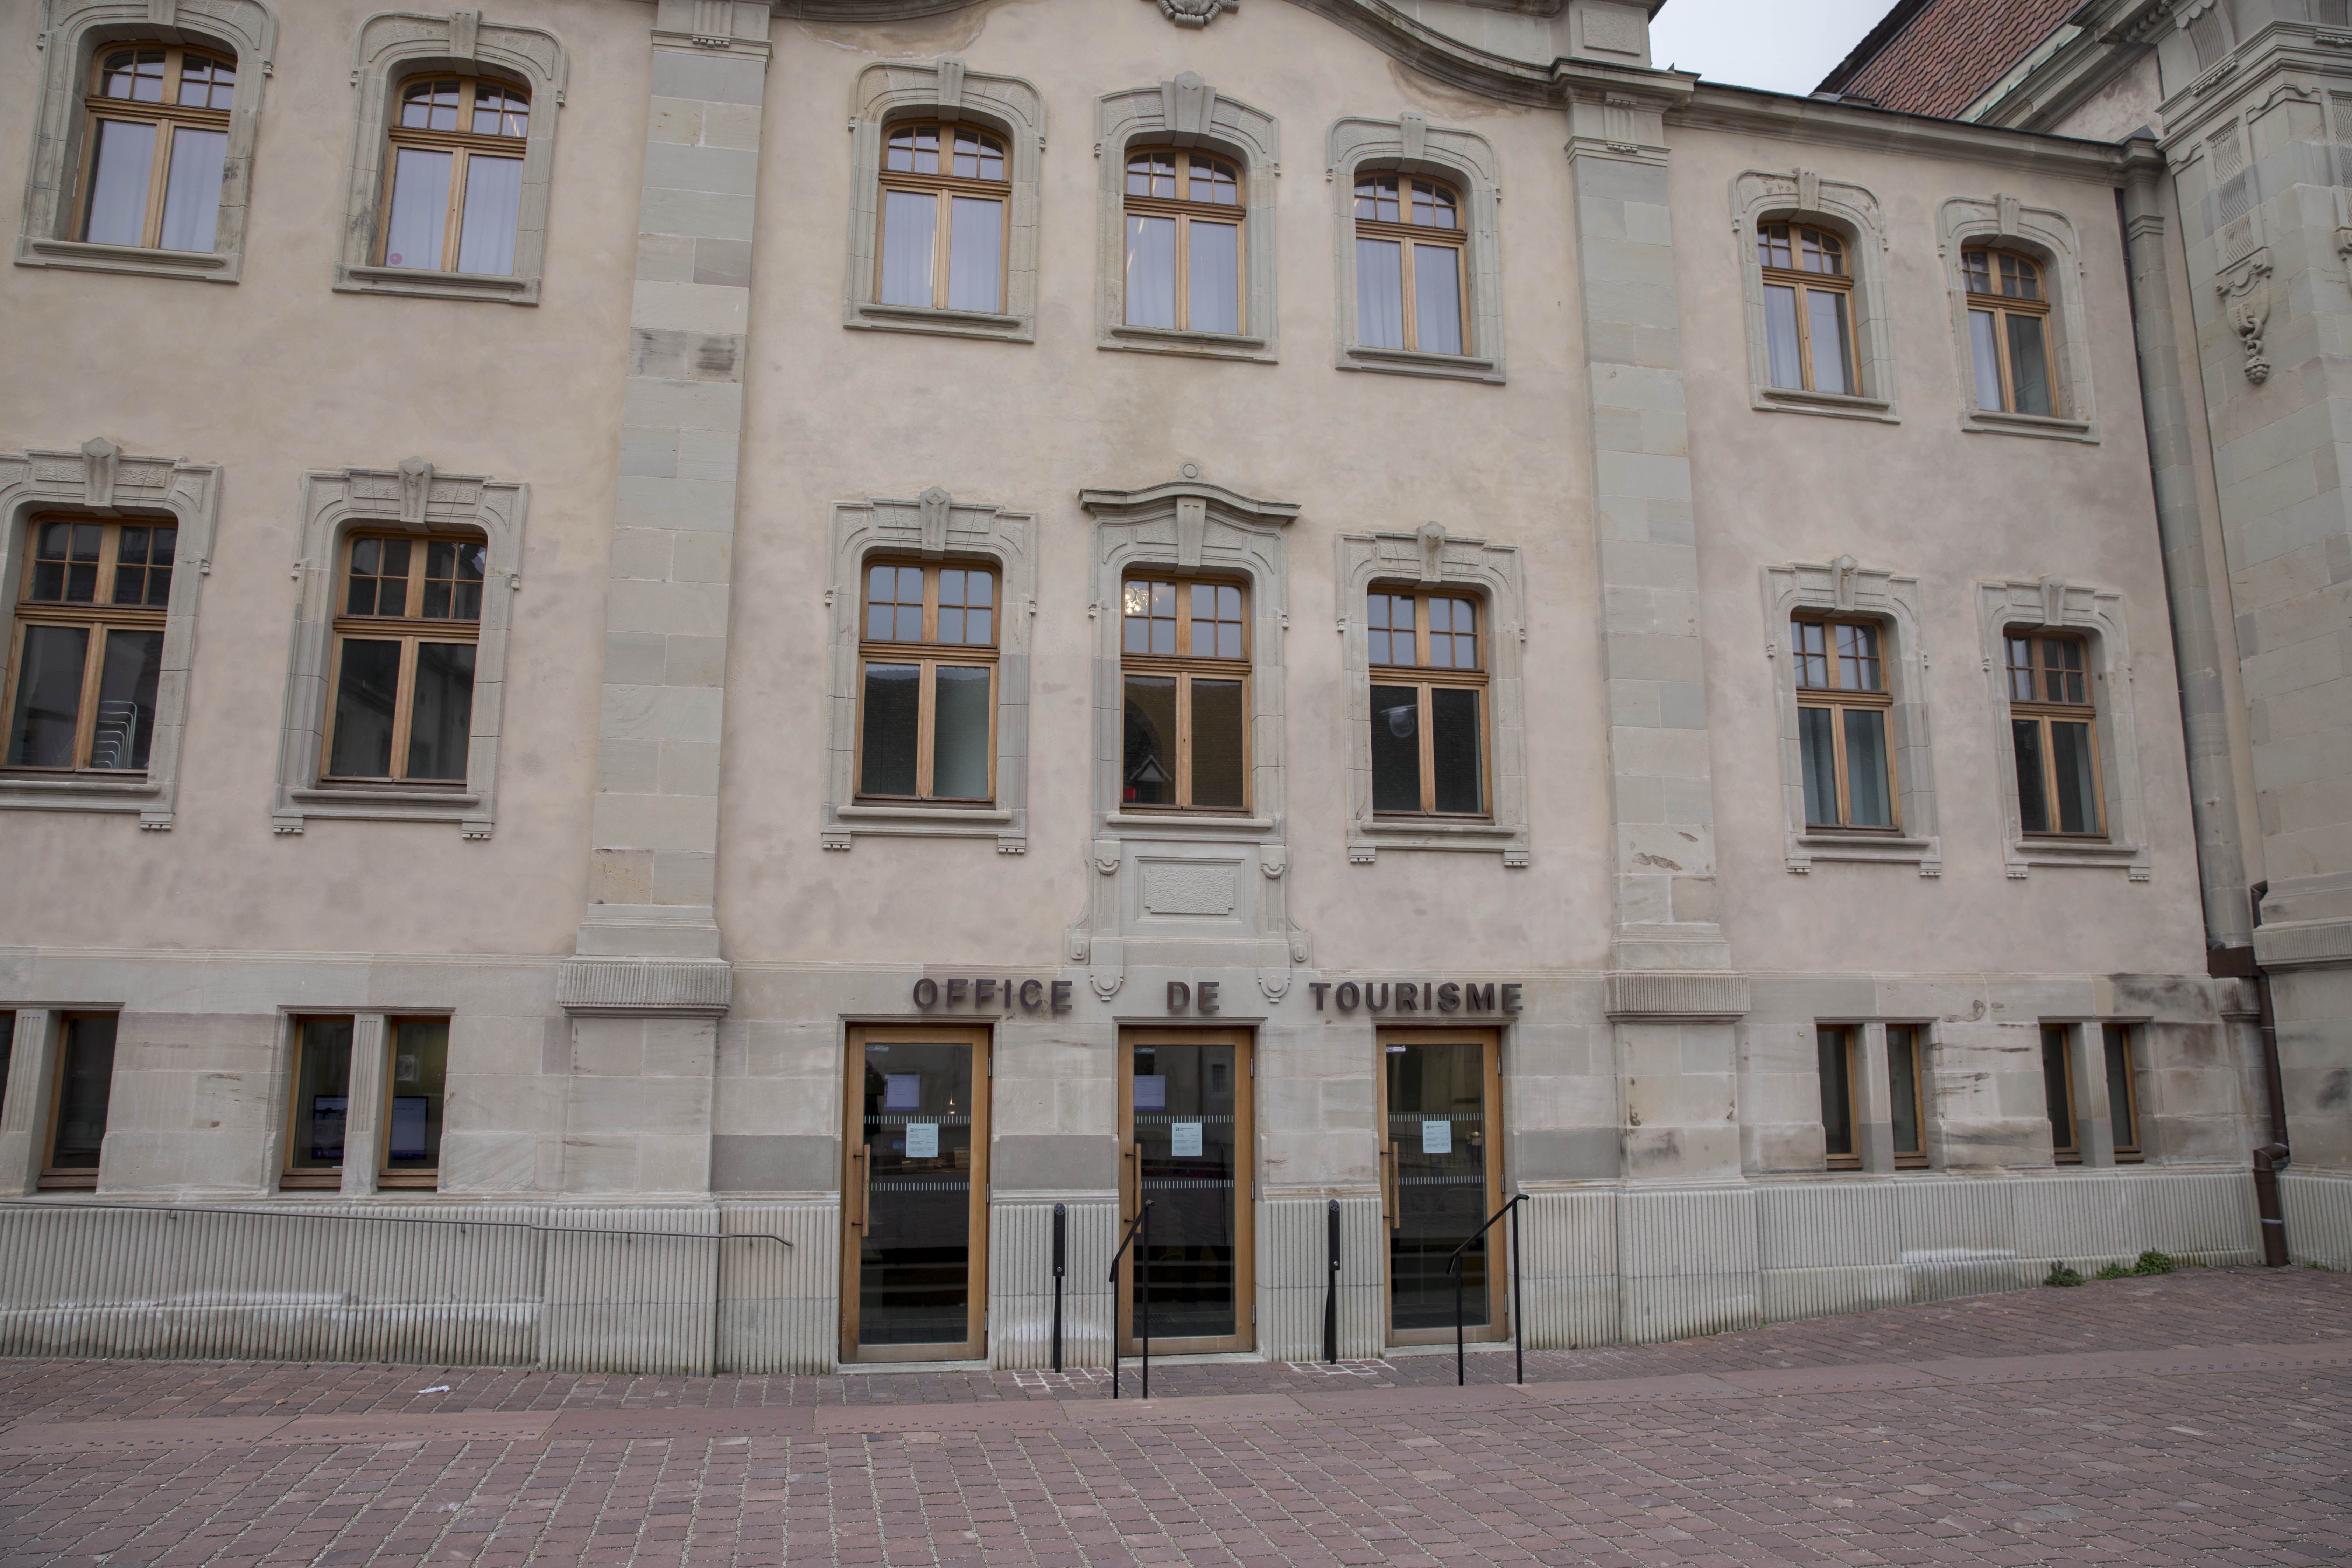 Facade de l'Office de Tourisme de Colmar